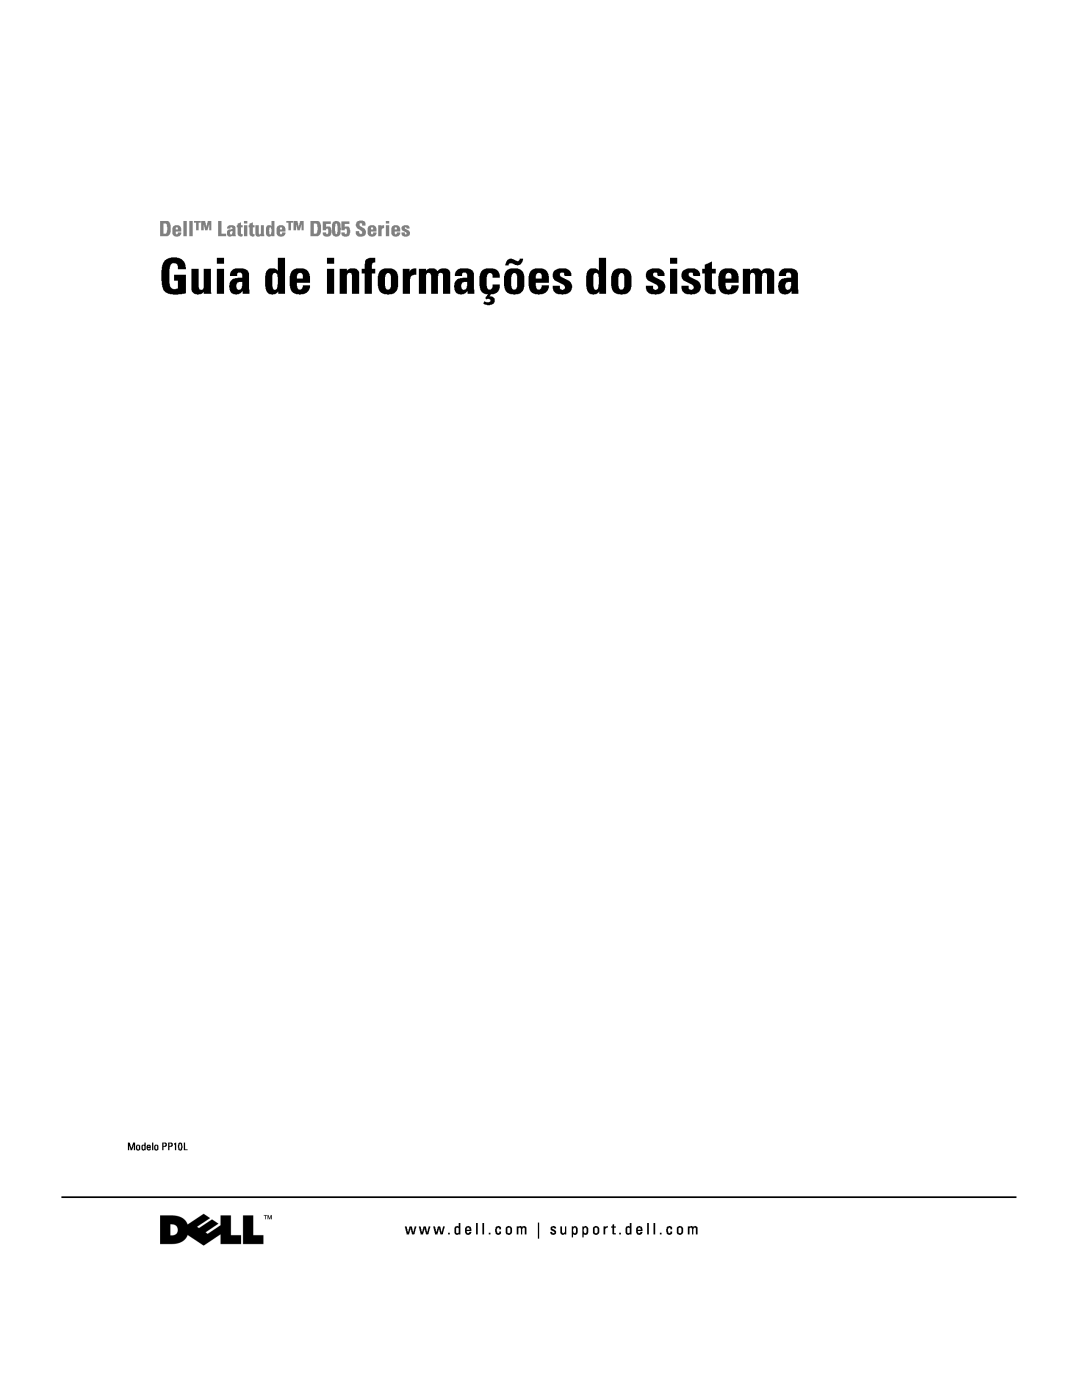 Dell manual Guia de informações do sistema, Dell Latitude D505 Series, Modelo PP10L 